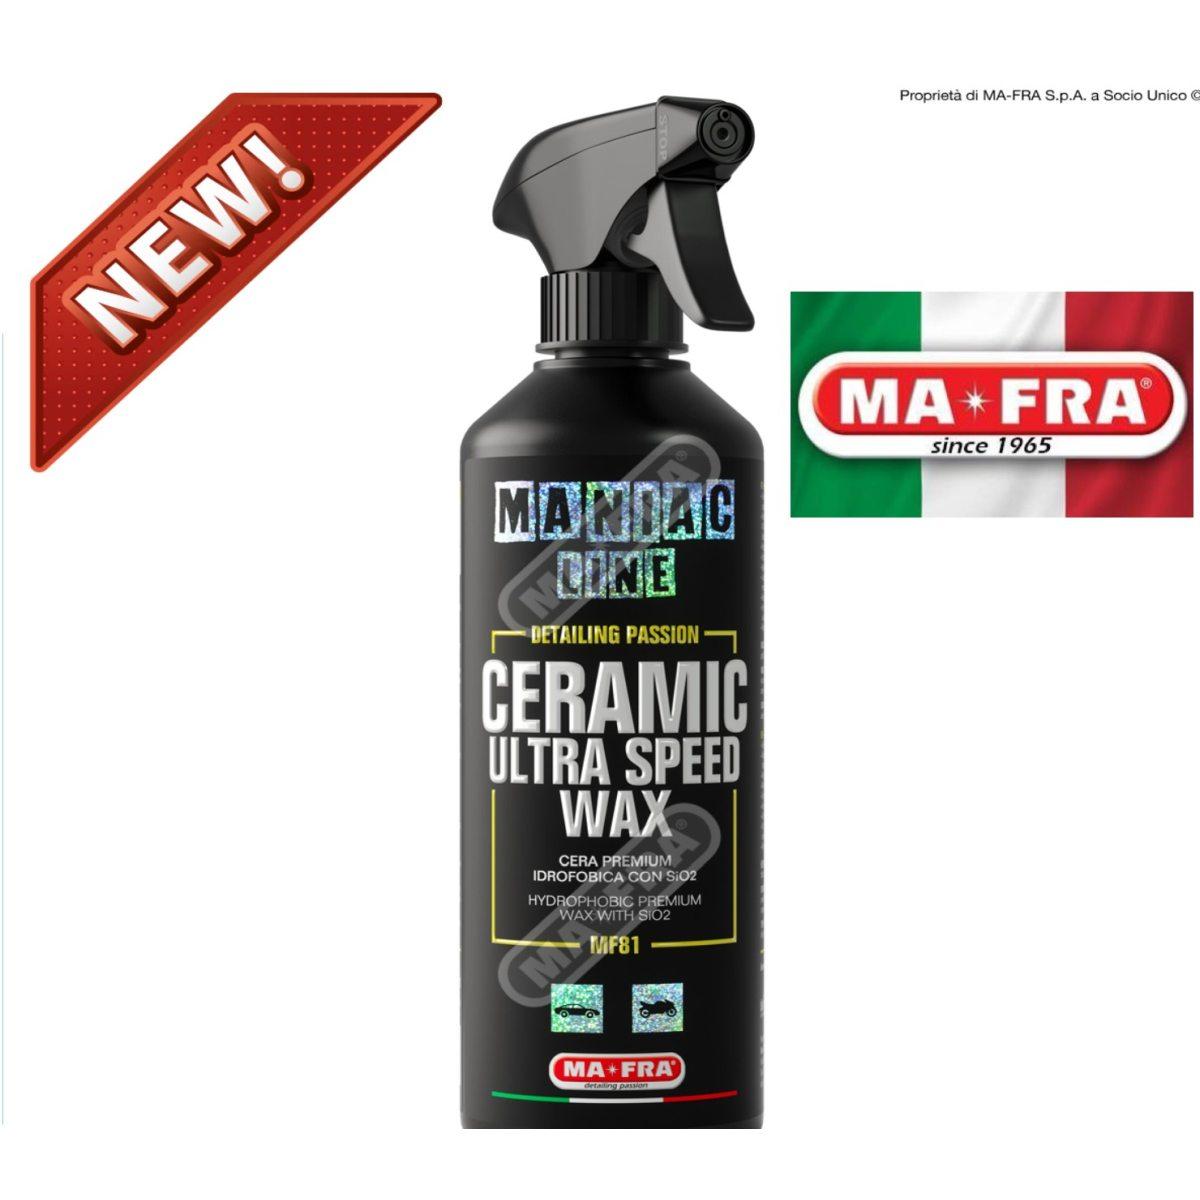 Mafra CERAMIC ULTRA SPEED WAX - Cera Premium cera spray